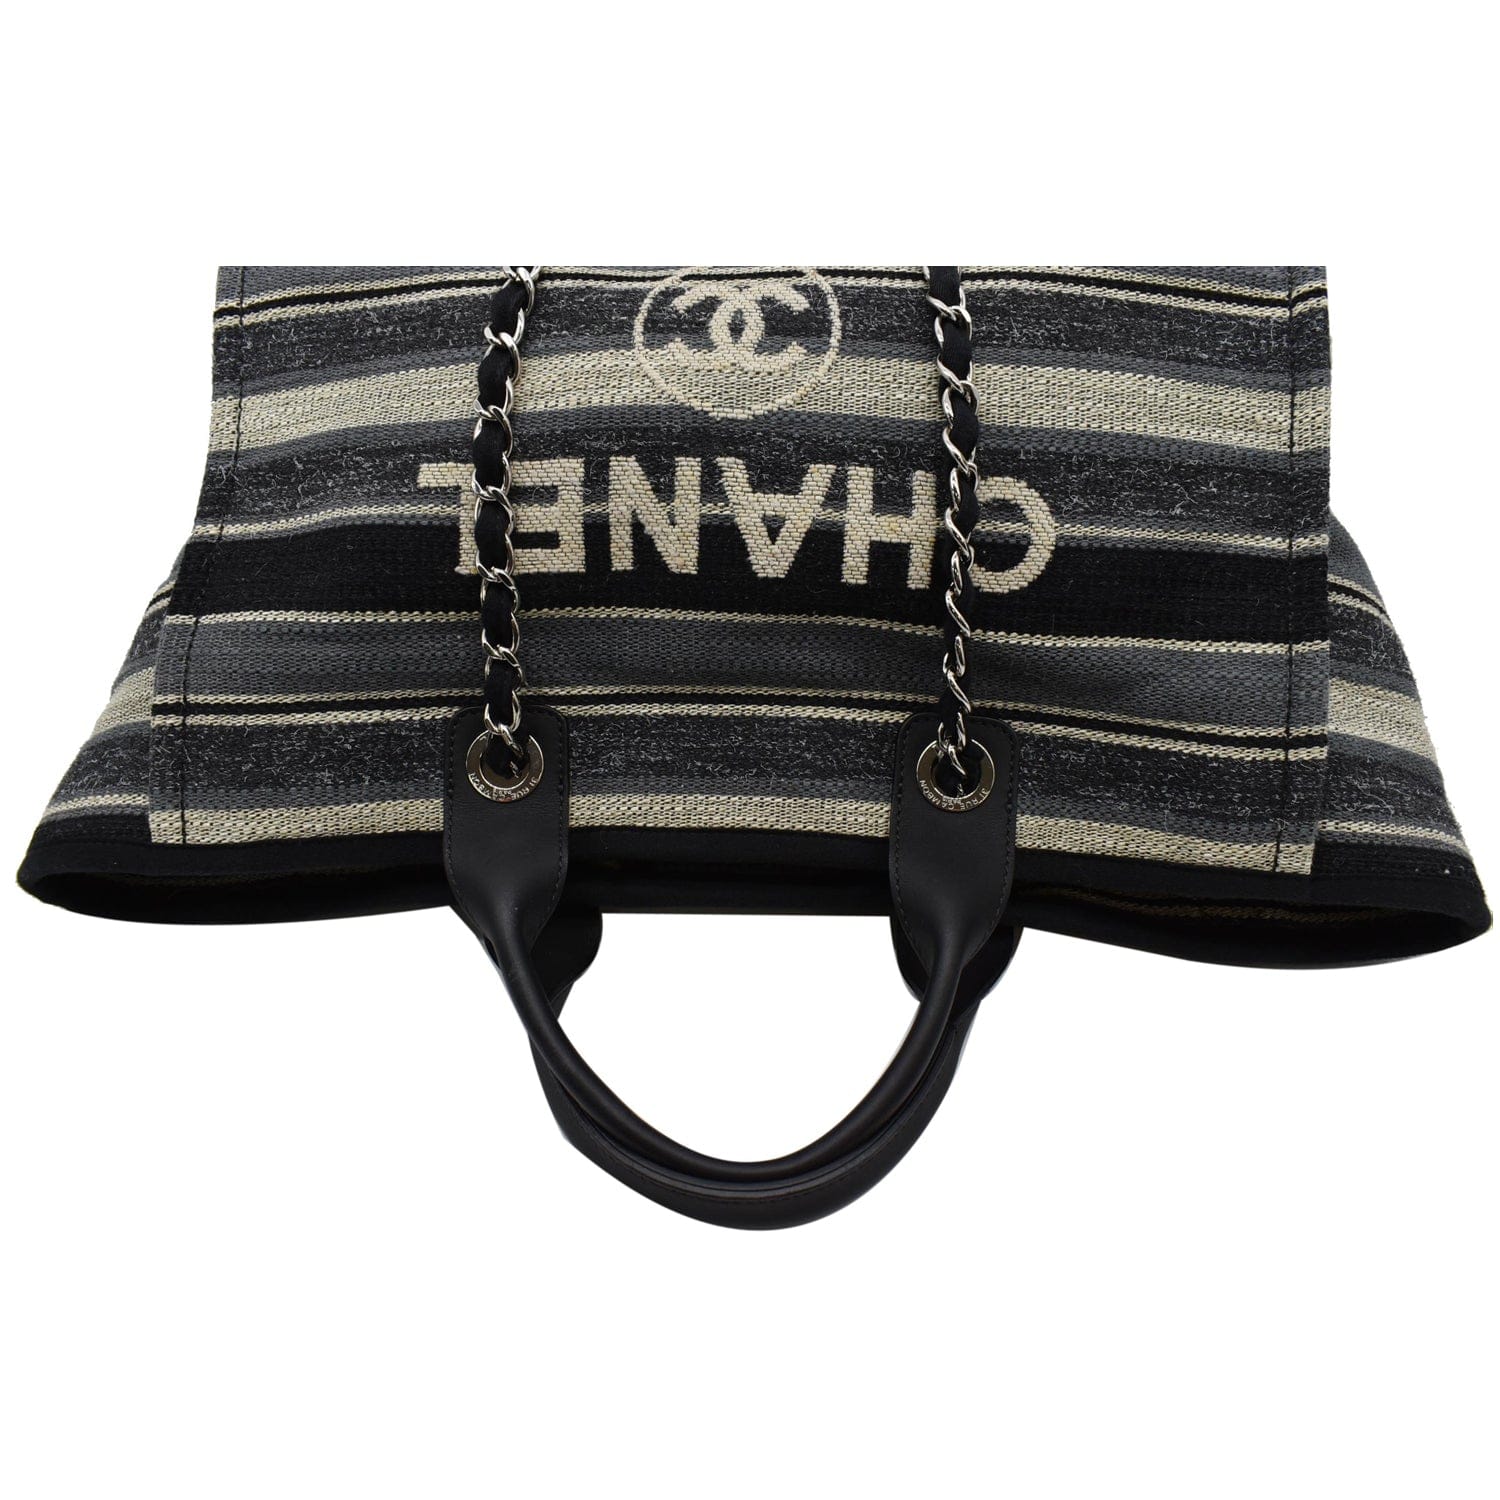 Deauville cloth handbag Chanel Black in Fabric - 25693725